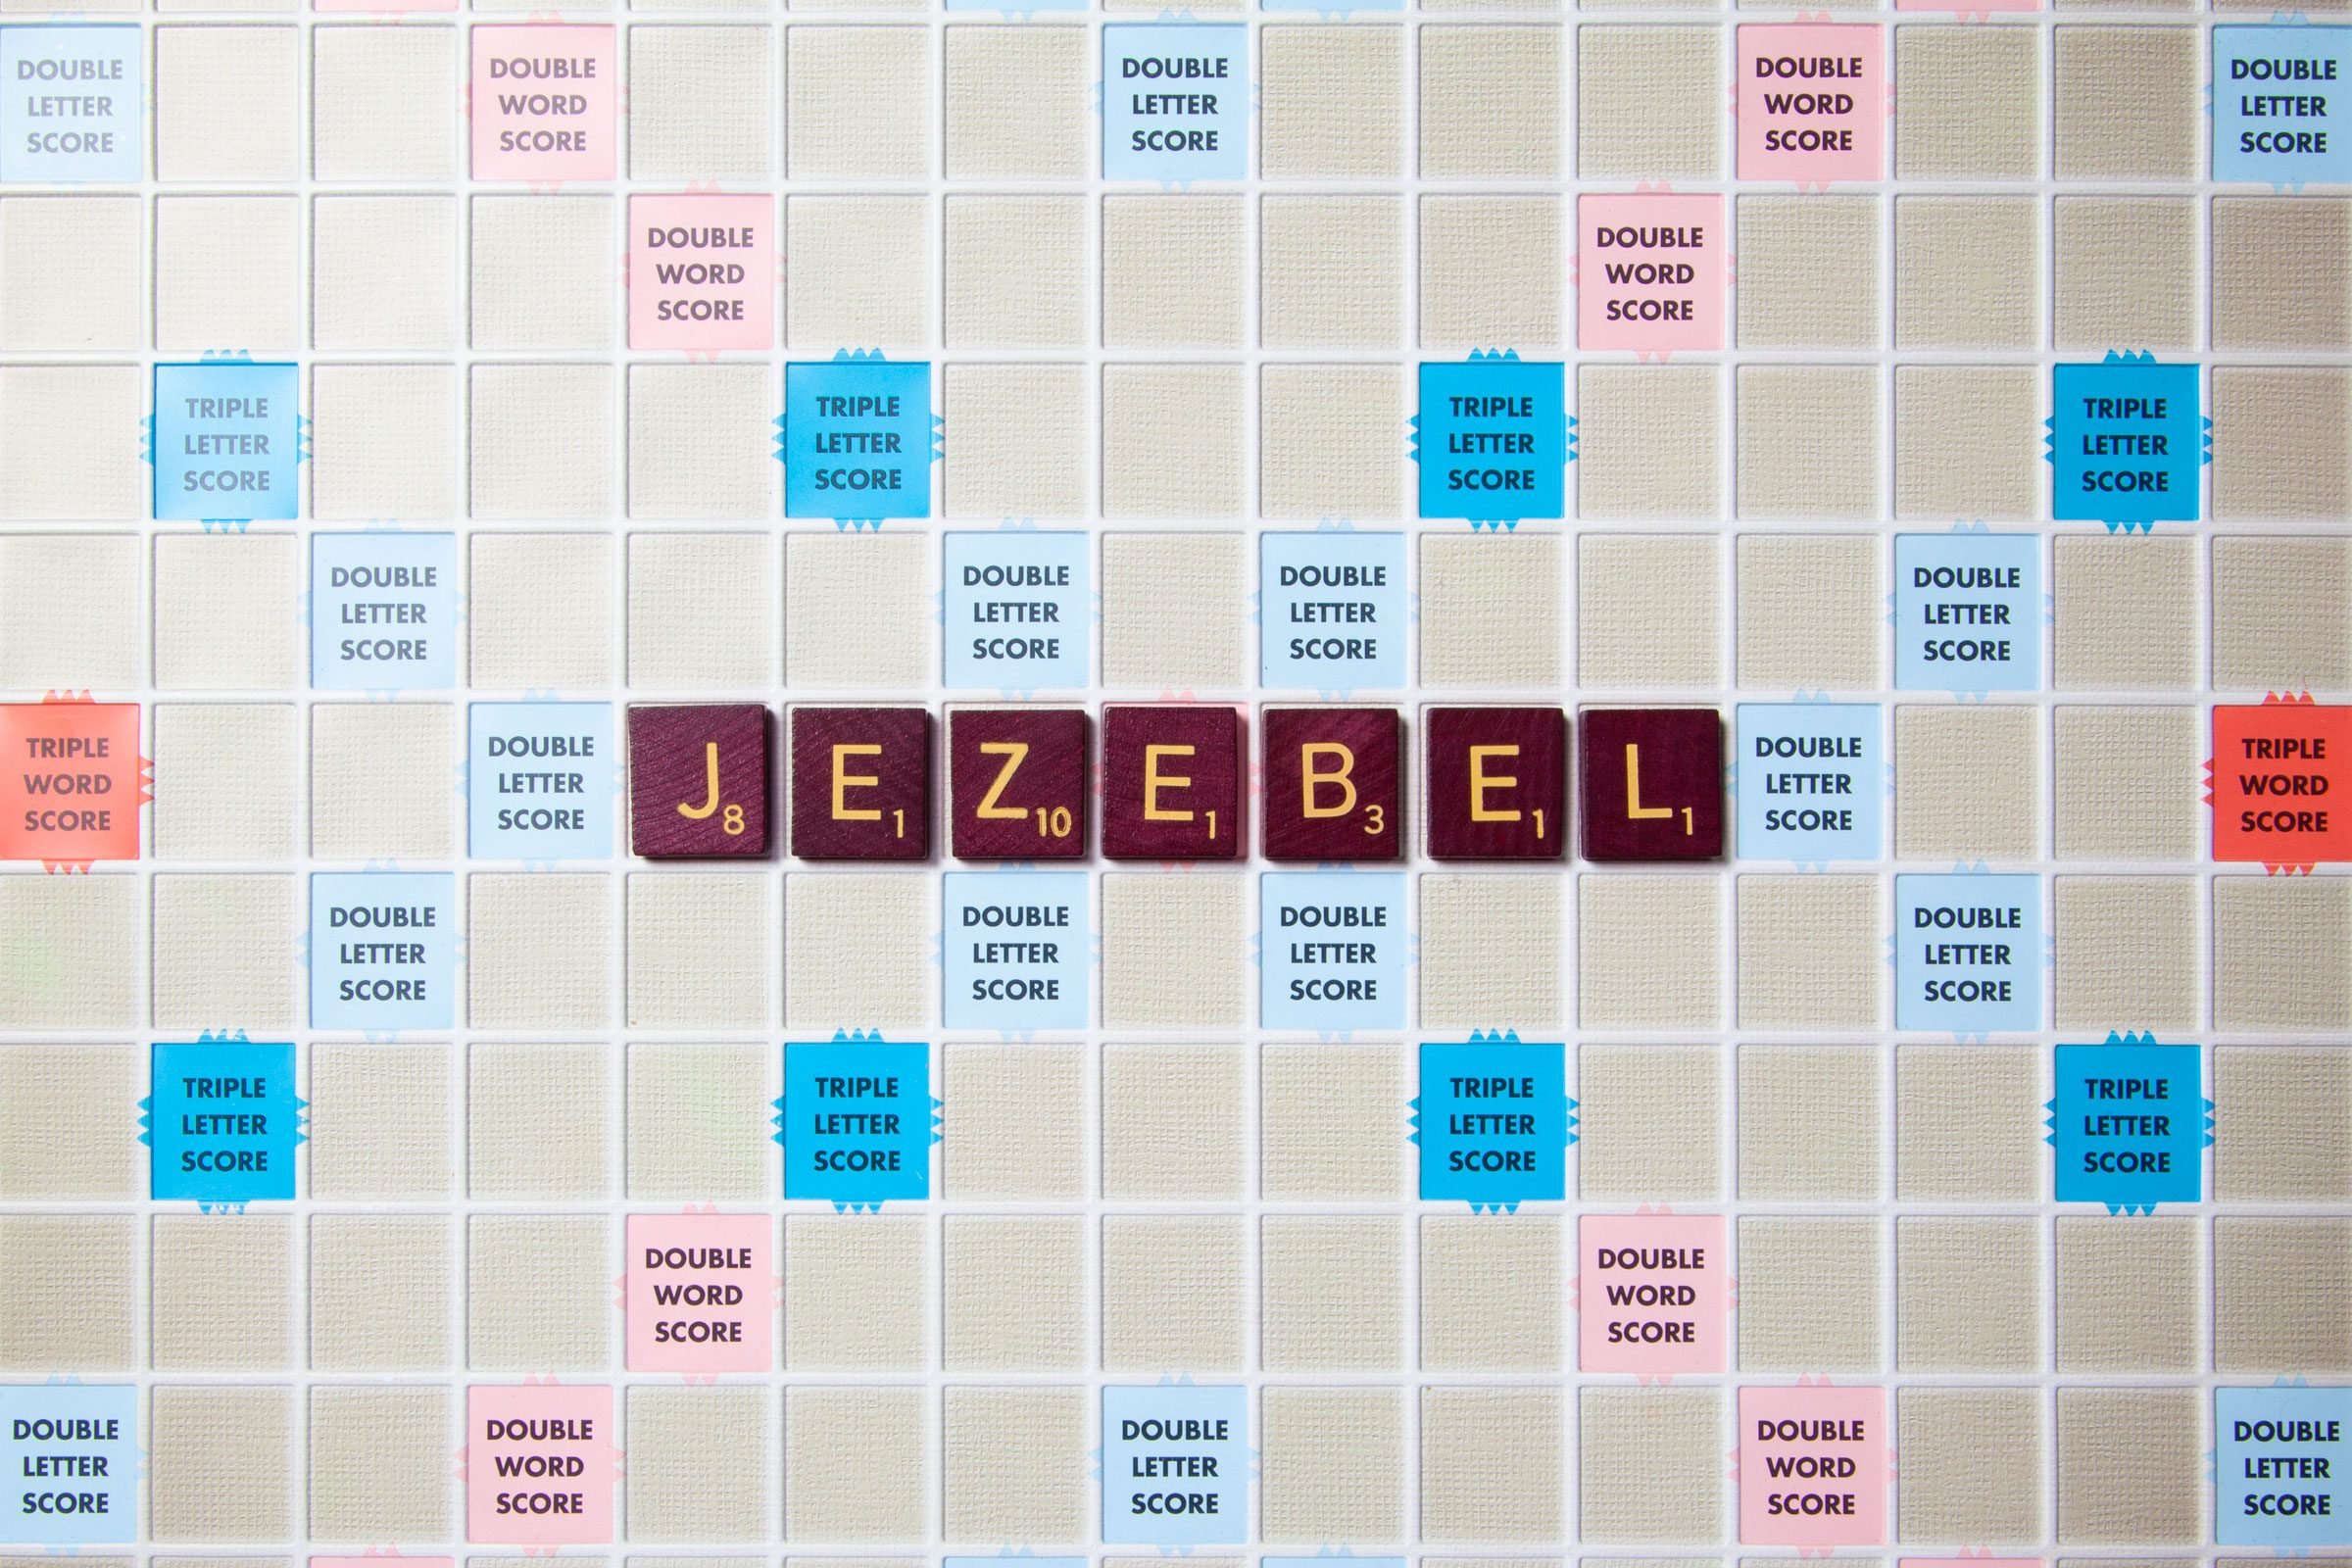 20180405_Scrabble12414_jezebel.jpg